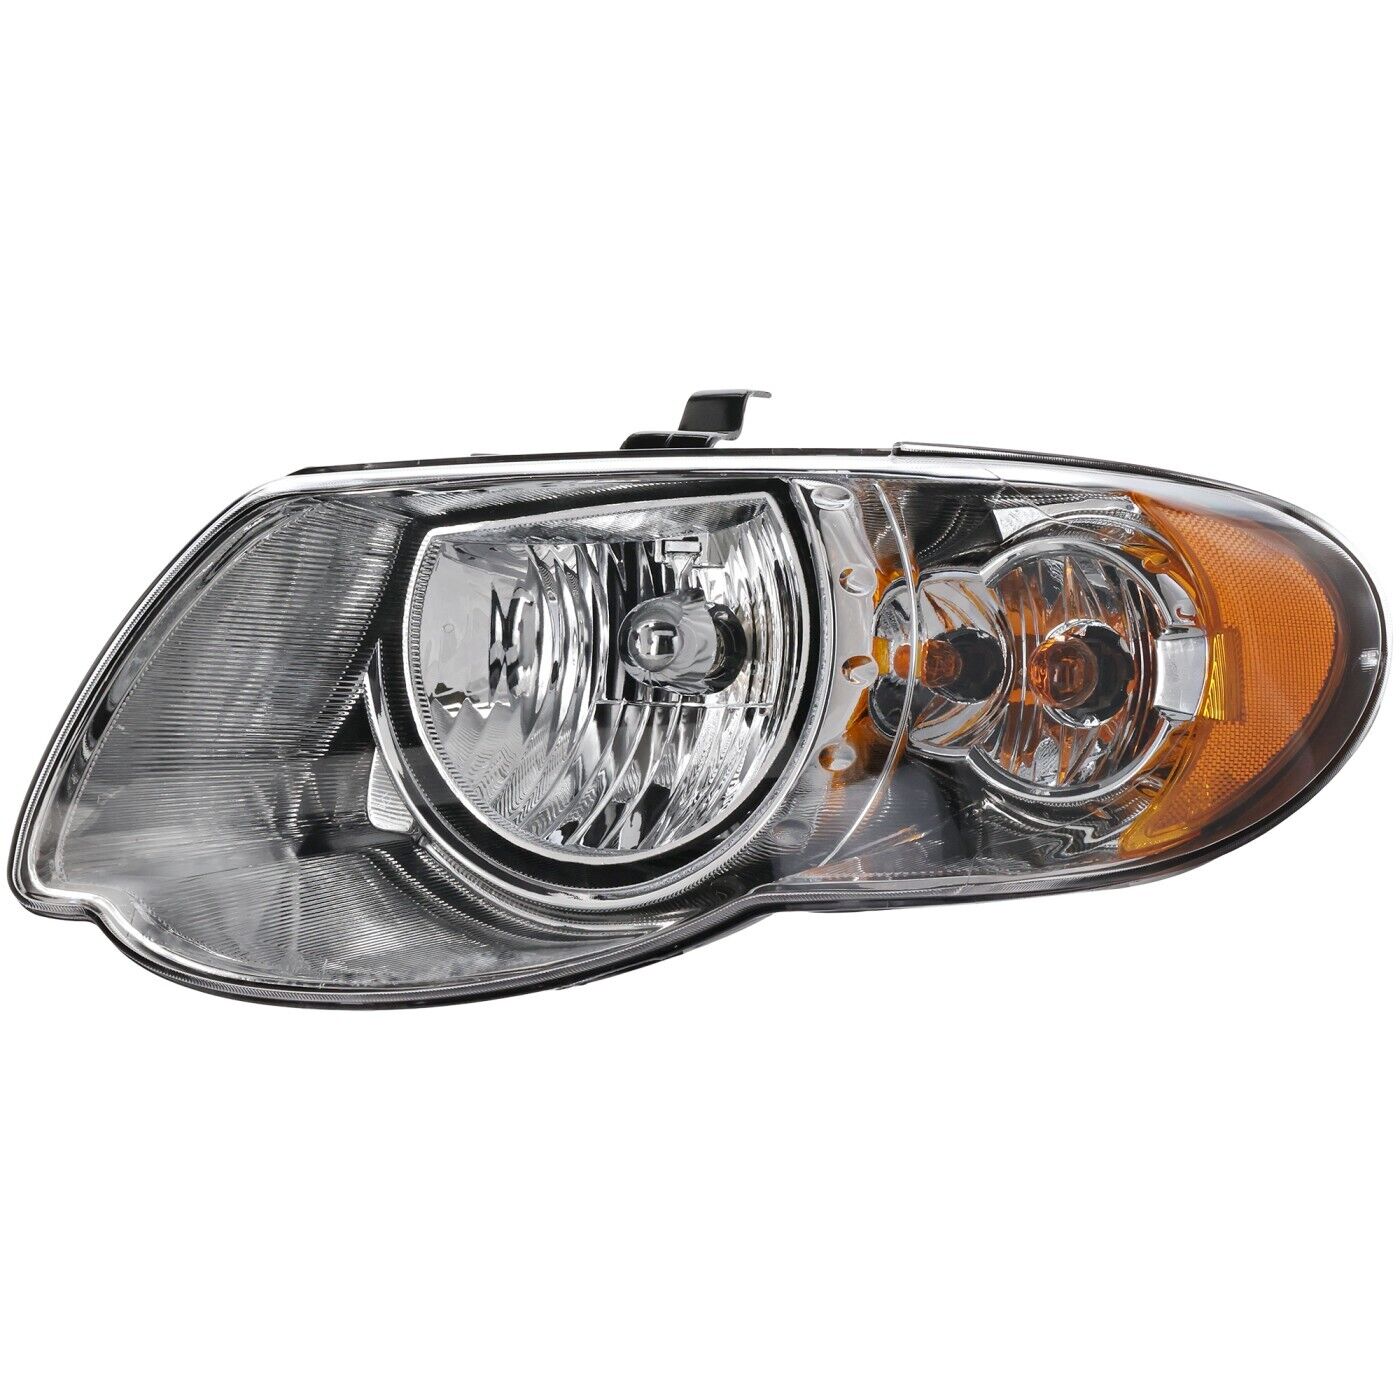 Headlight Left For 2005-2007 Chrysler Town & Country Long Wheelbase 119 inch WB